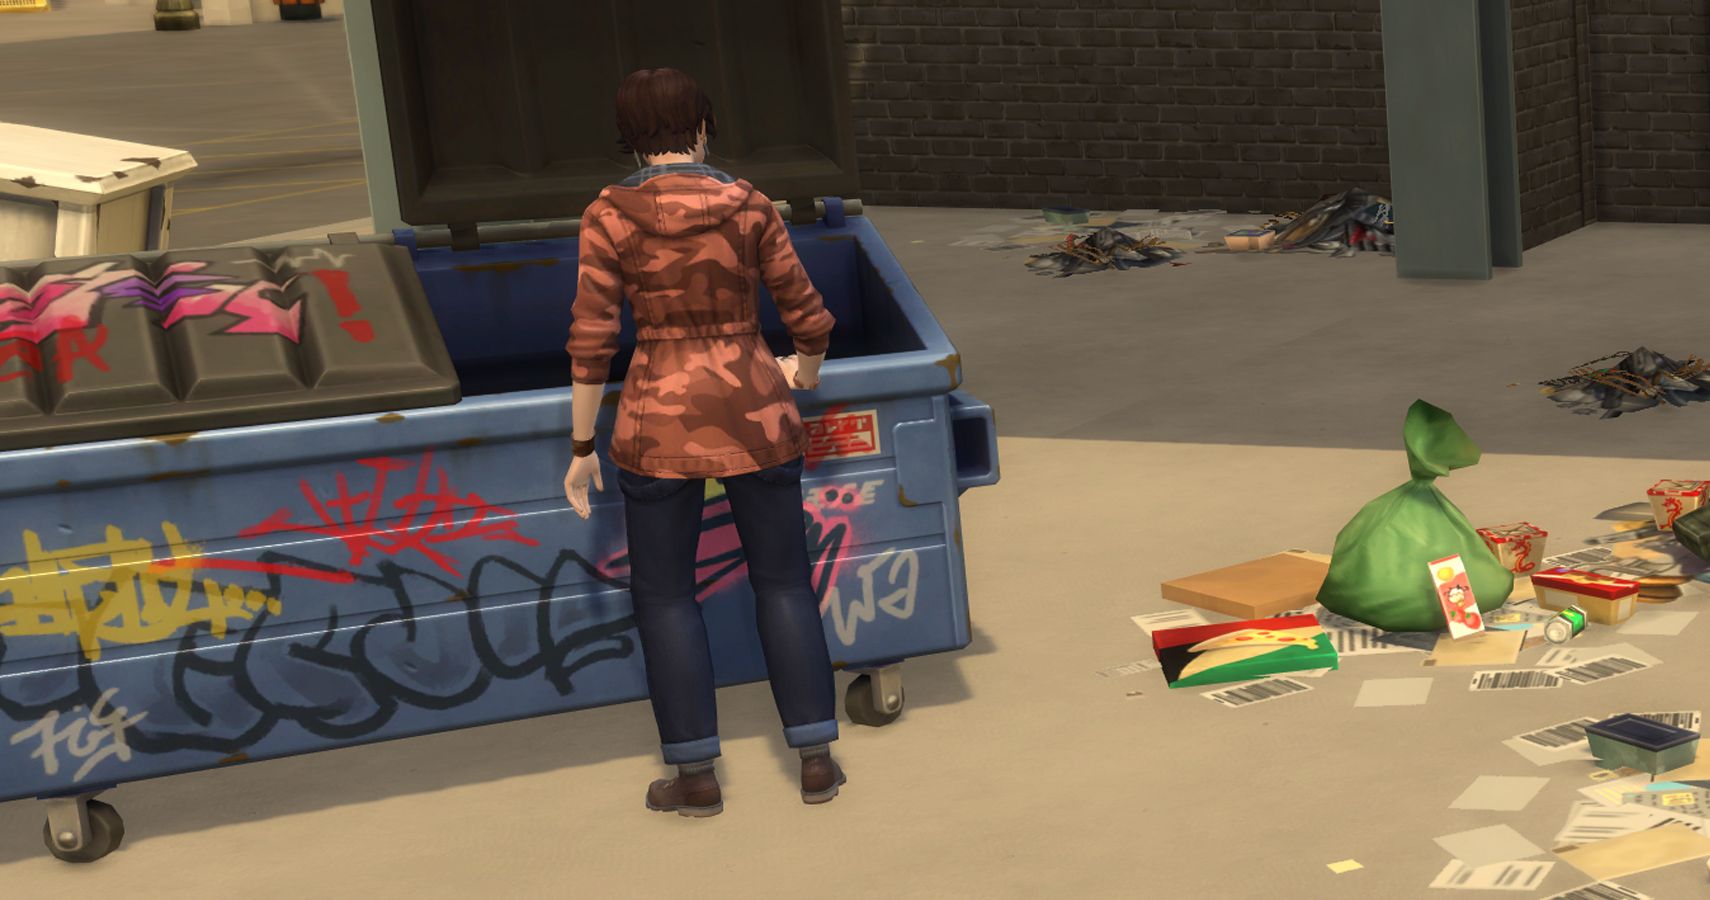 rumaging through trash in a dumpster.